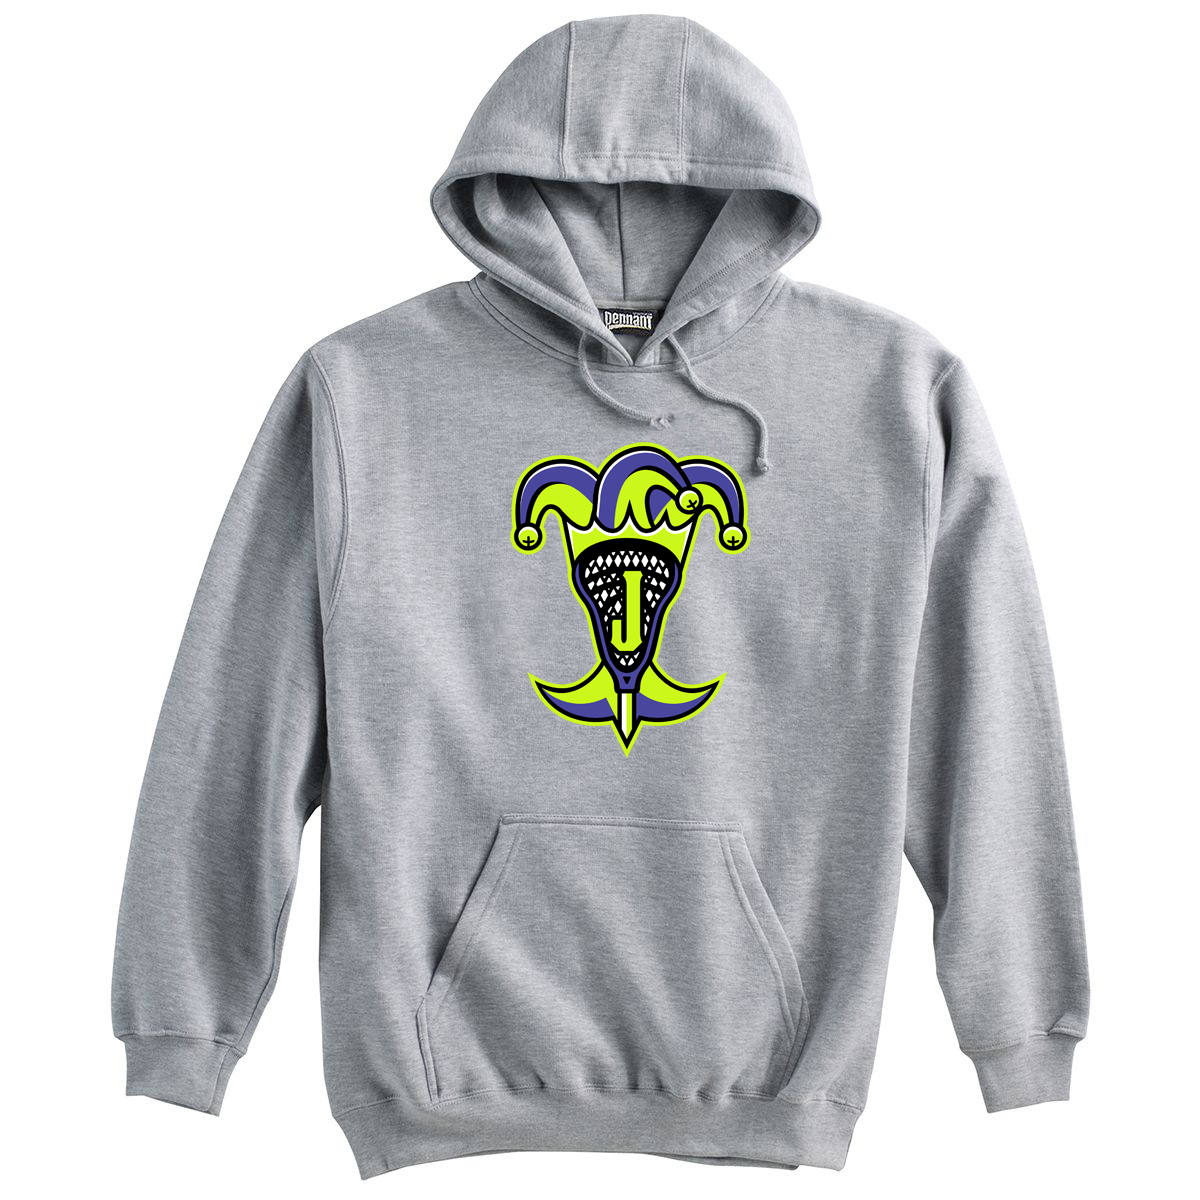 Epic Lacrosse Jokers Grey Sweatshirt Alt Logo